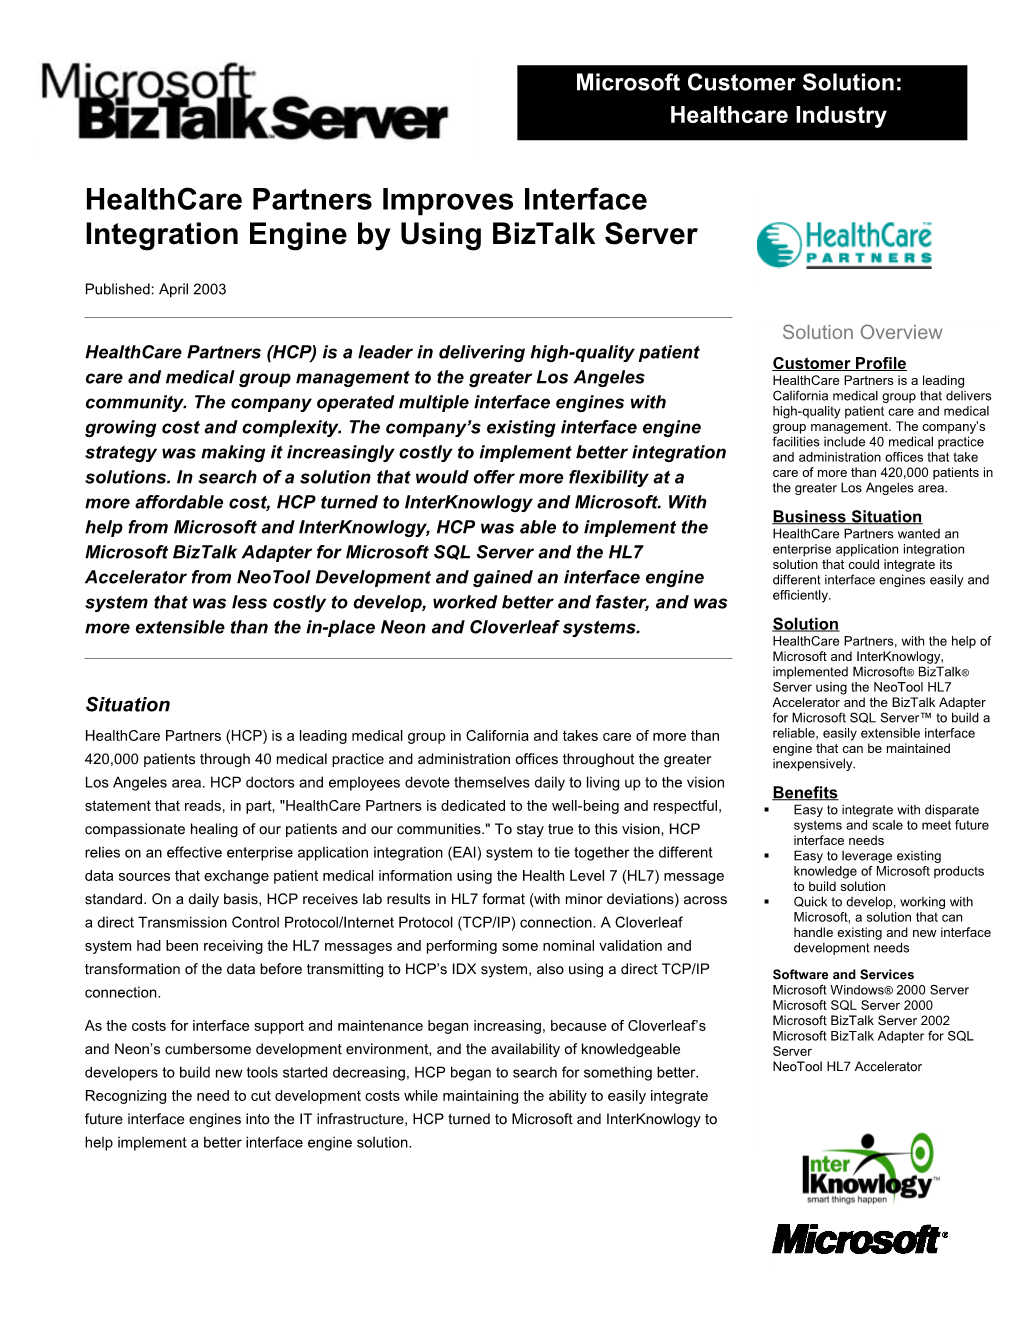 Healthcare Partners Improves Interface Integration Engine by Using Biztalk Server